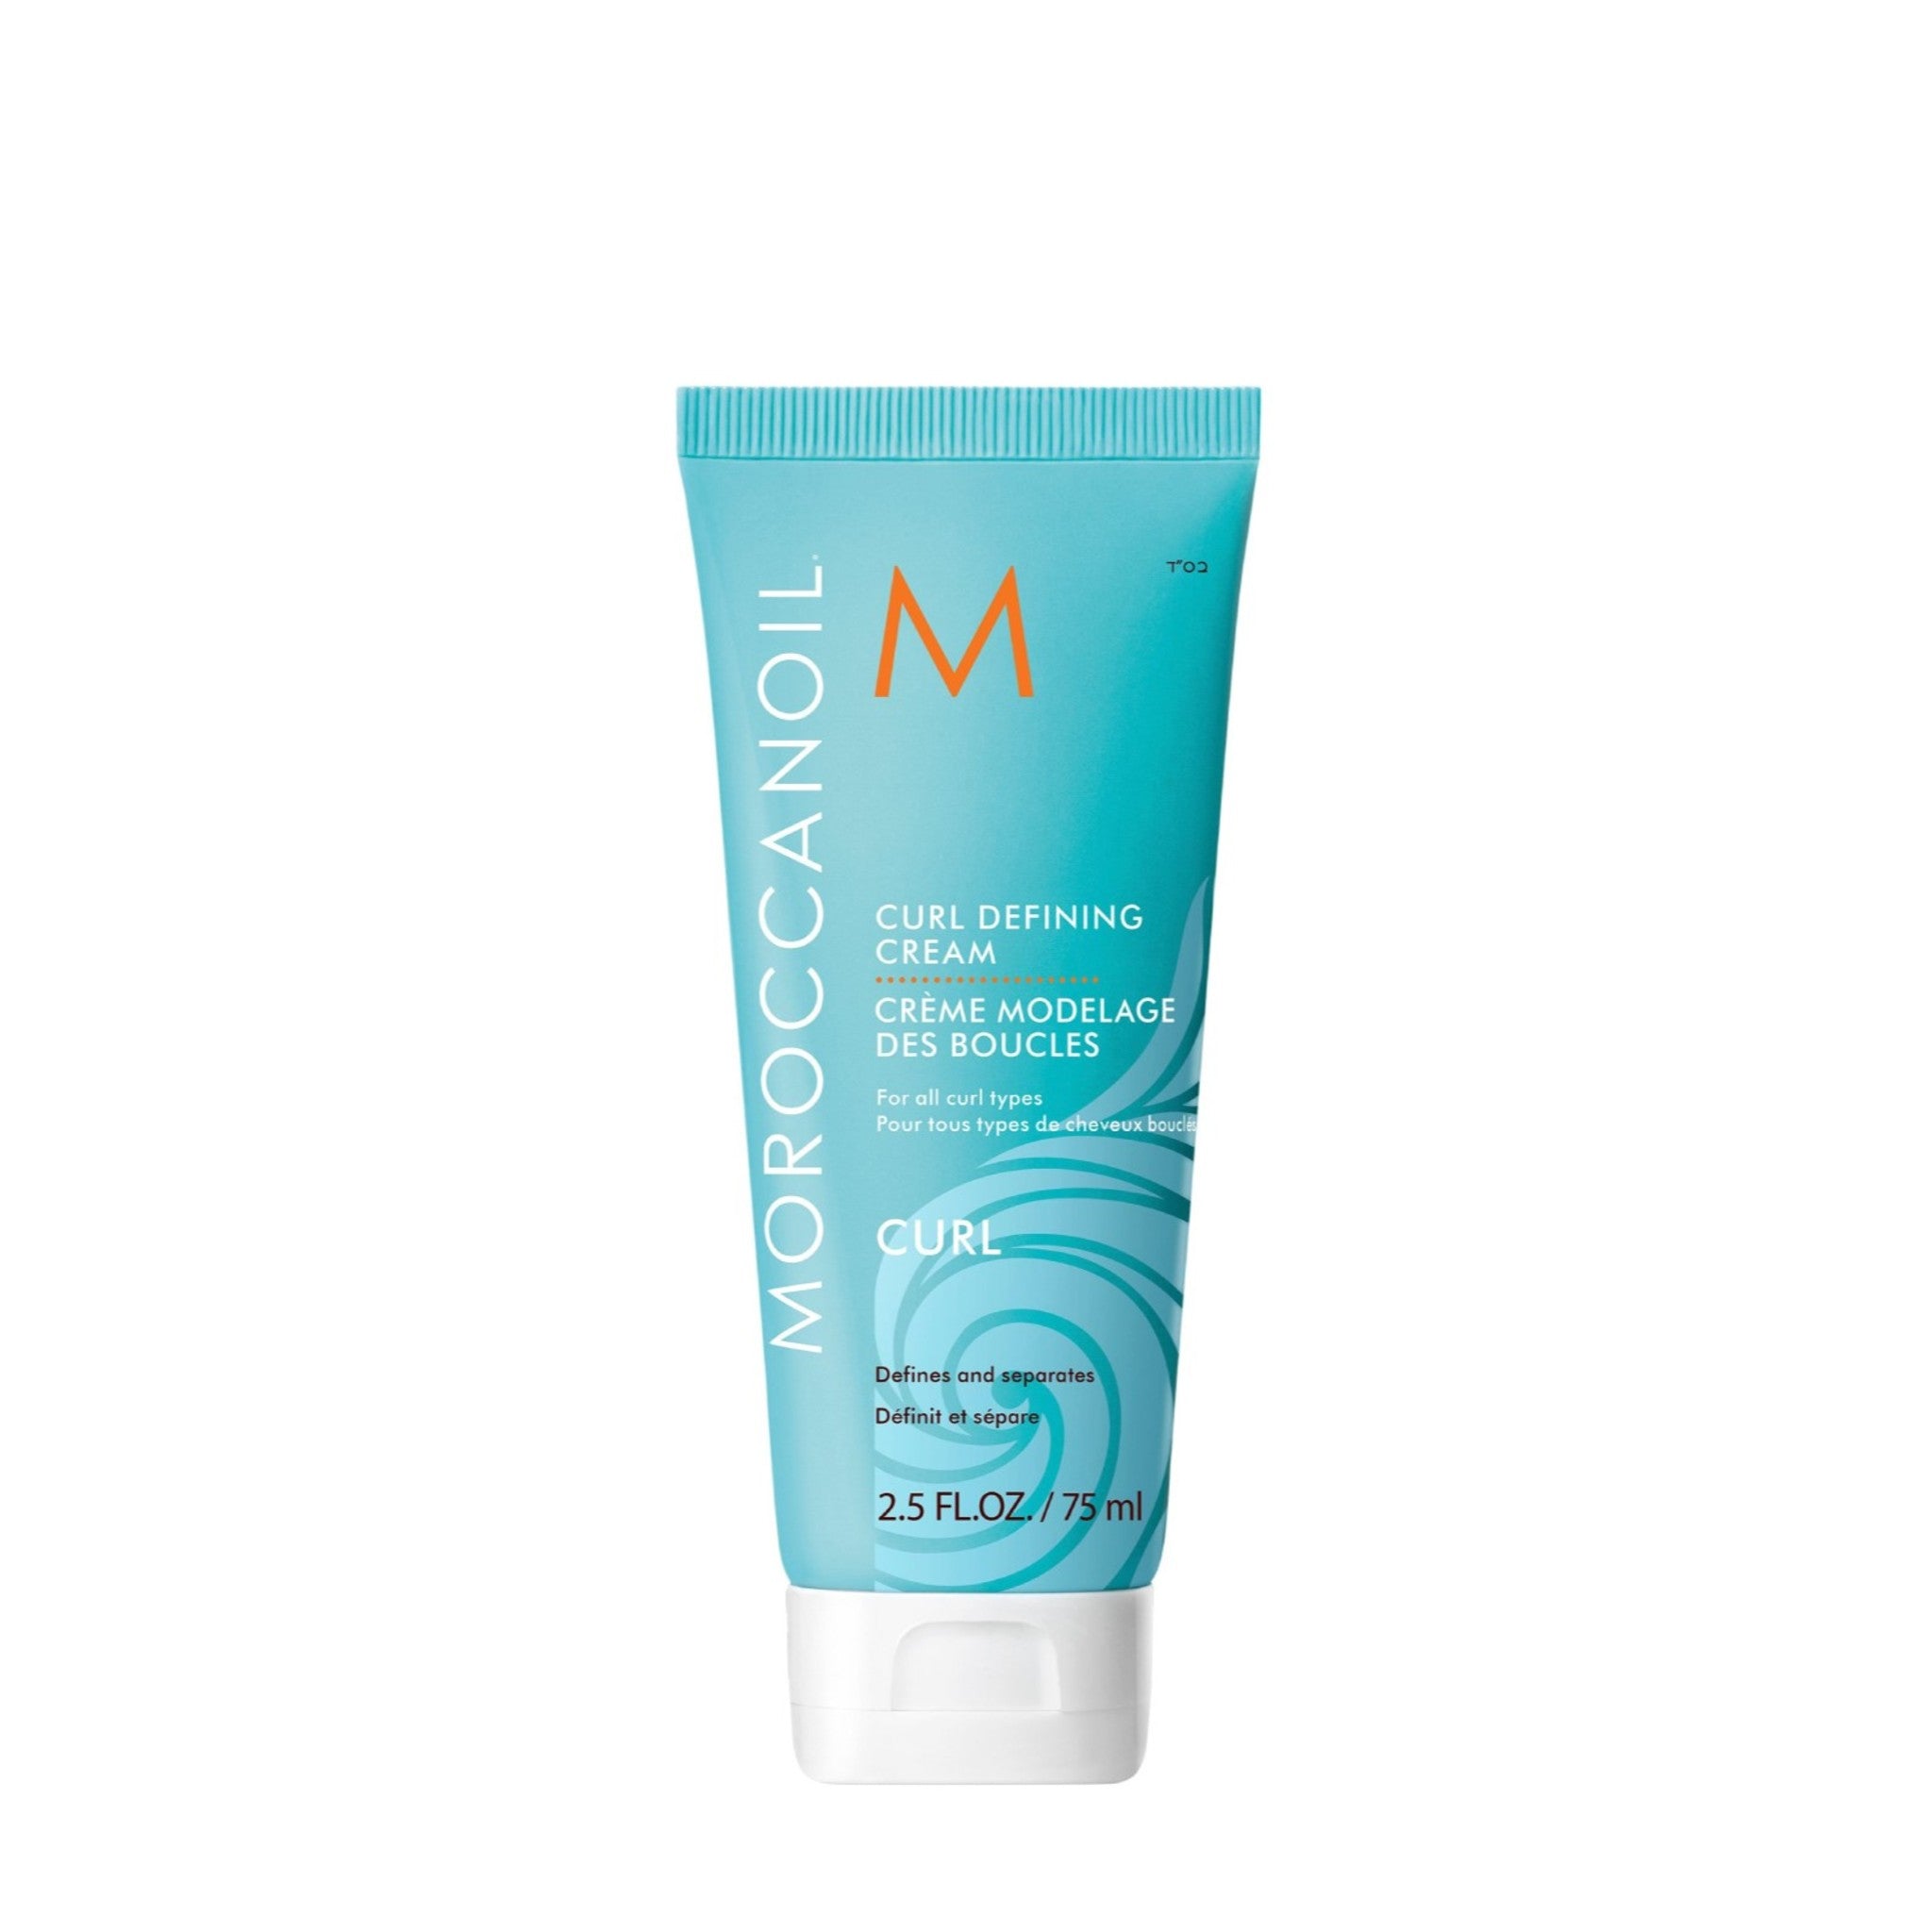 Moroccanoil Curl Defining Cream Size variant: 75 ML main image.